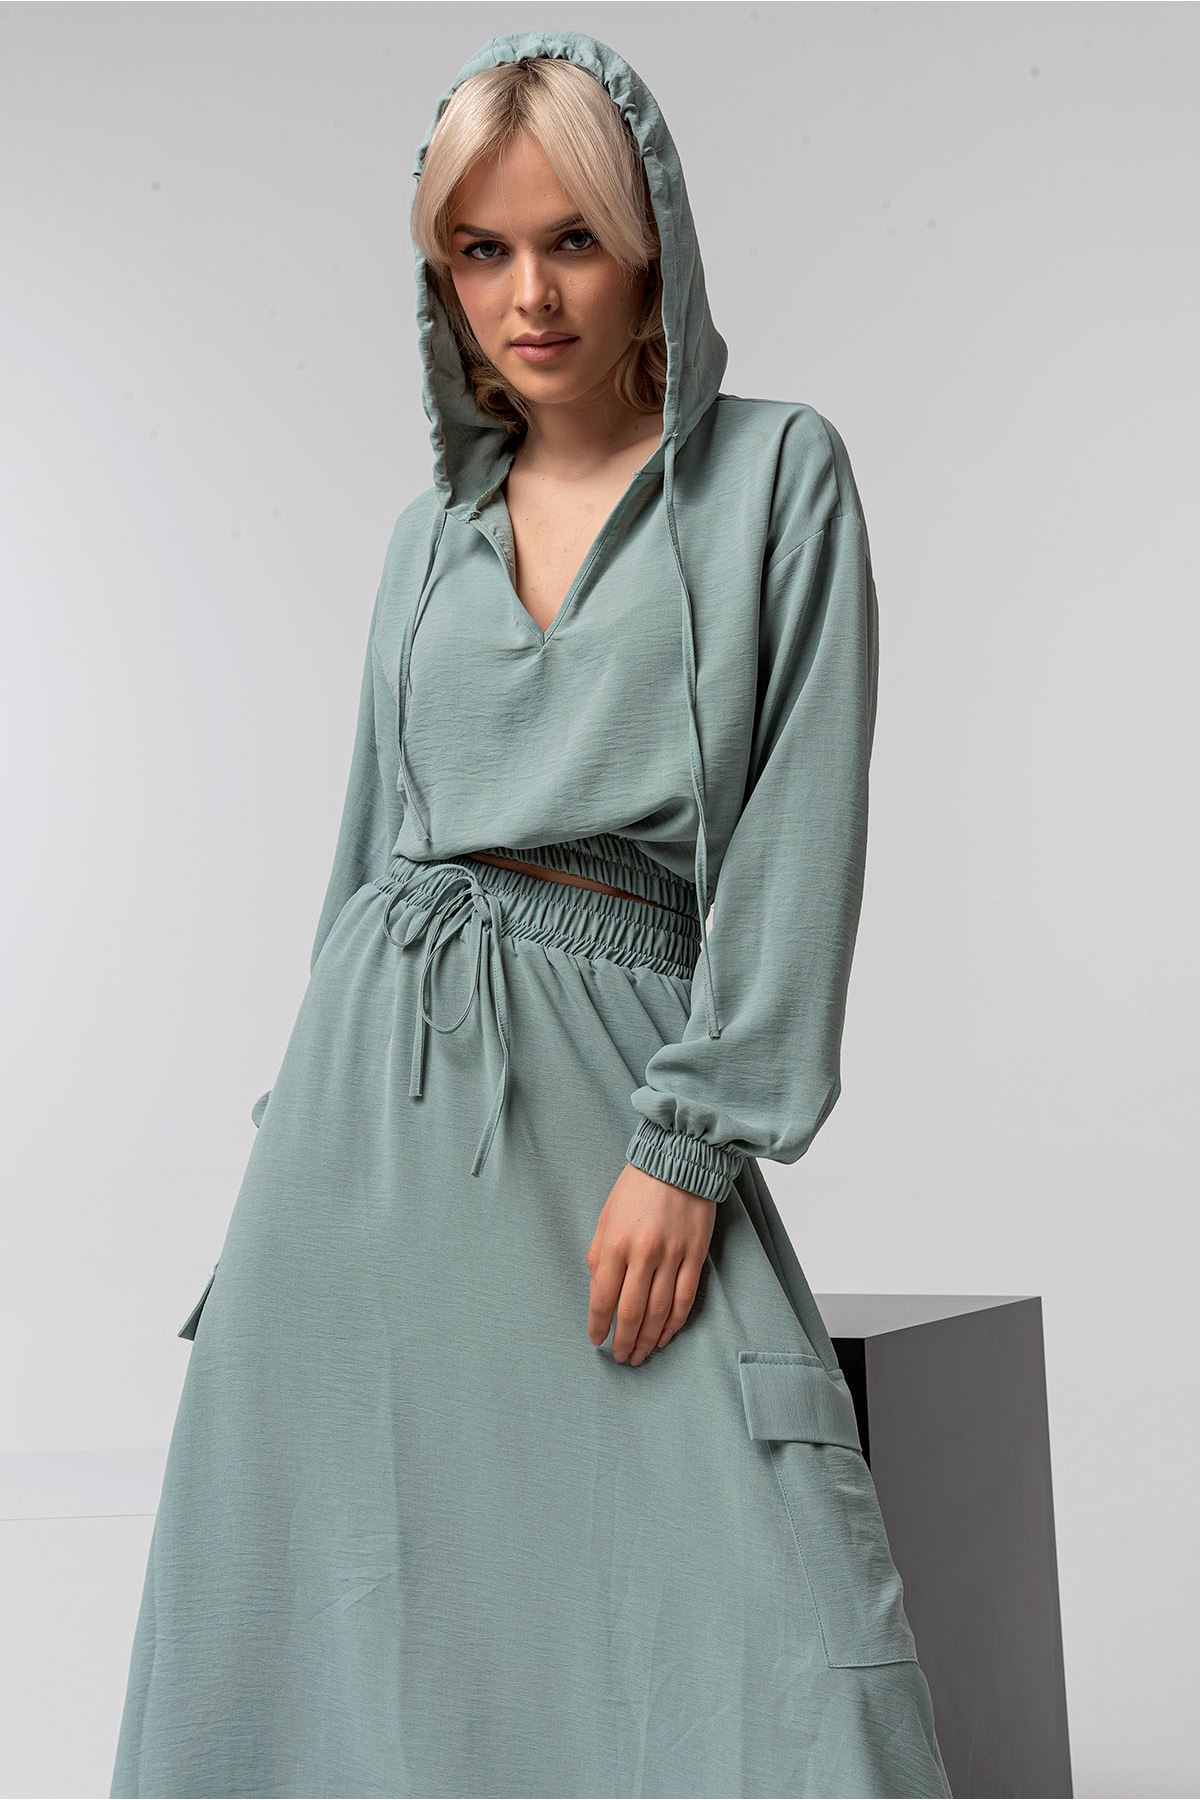 Aerobin Fabric Long Sleeve Hooded Oversize Blouse - Mint